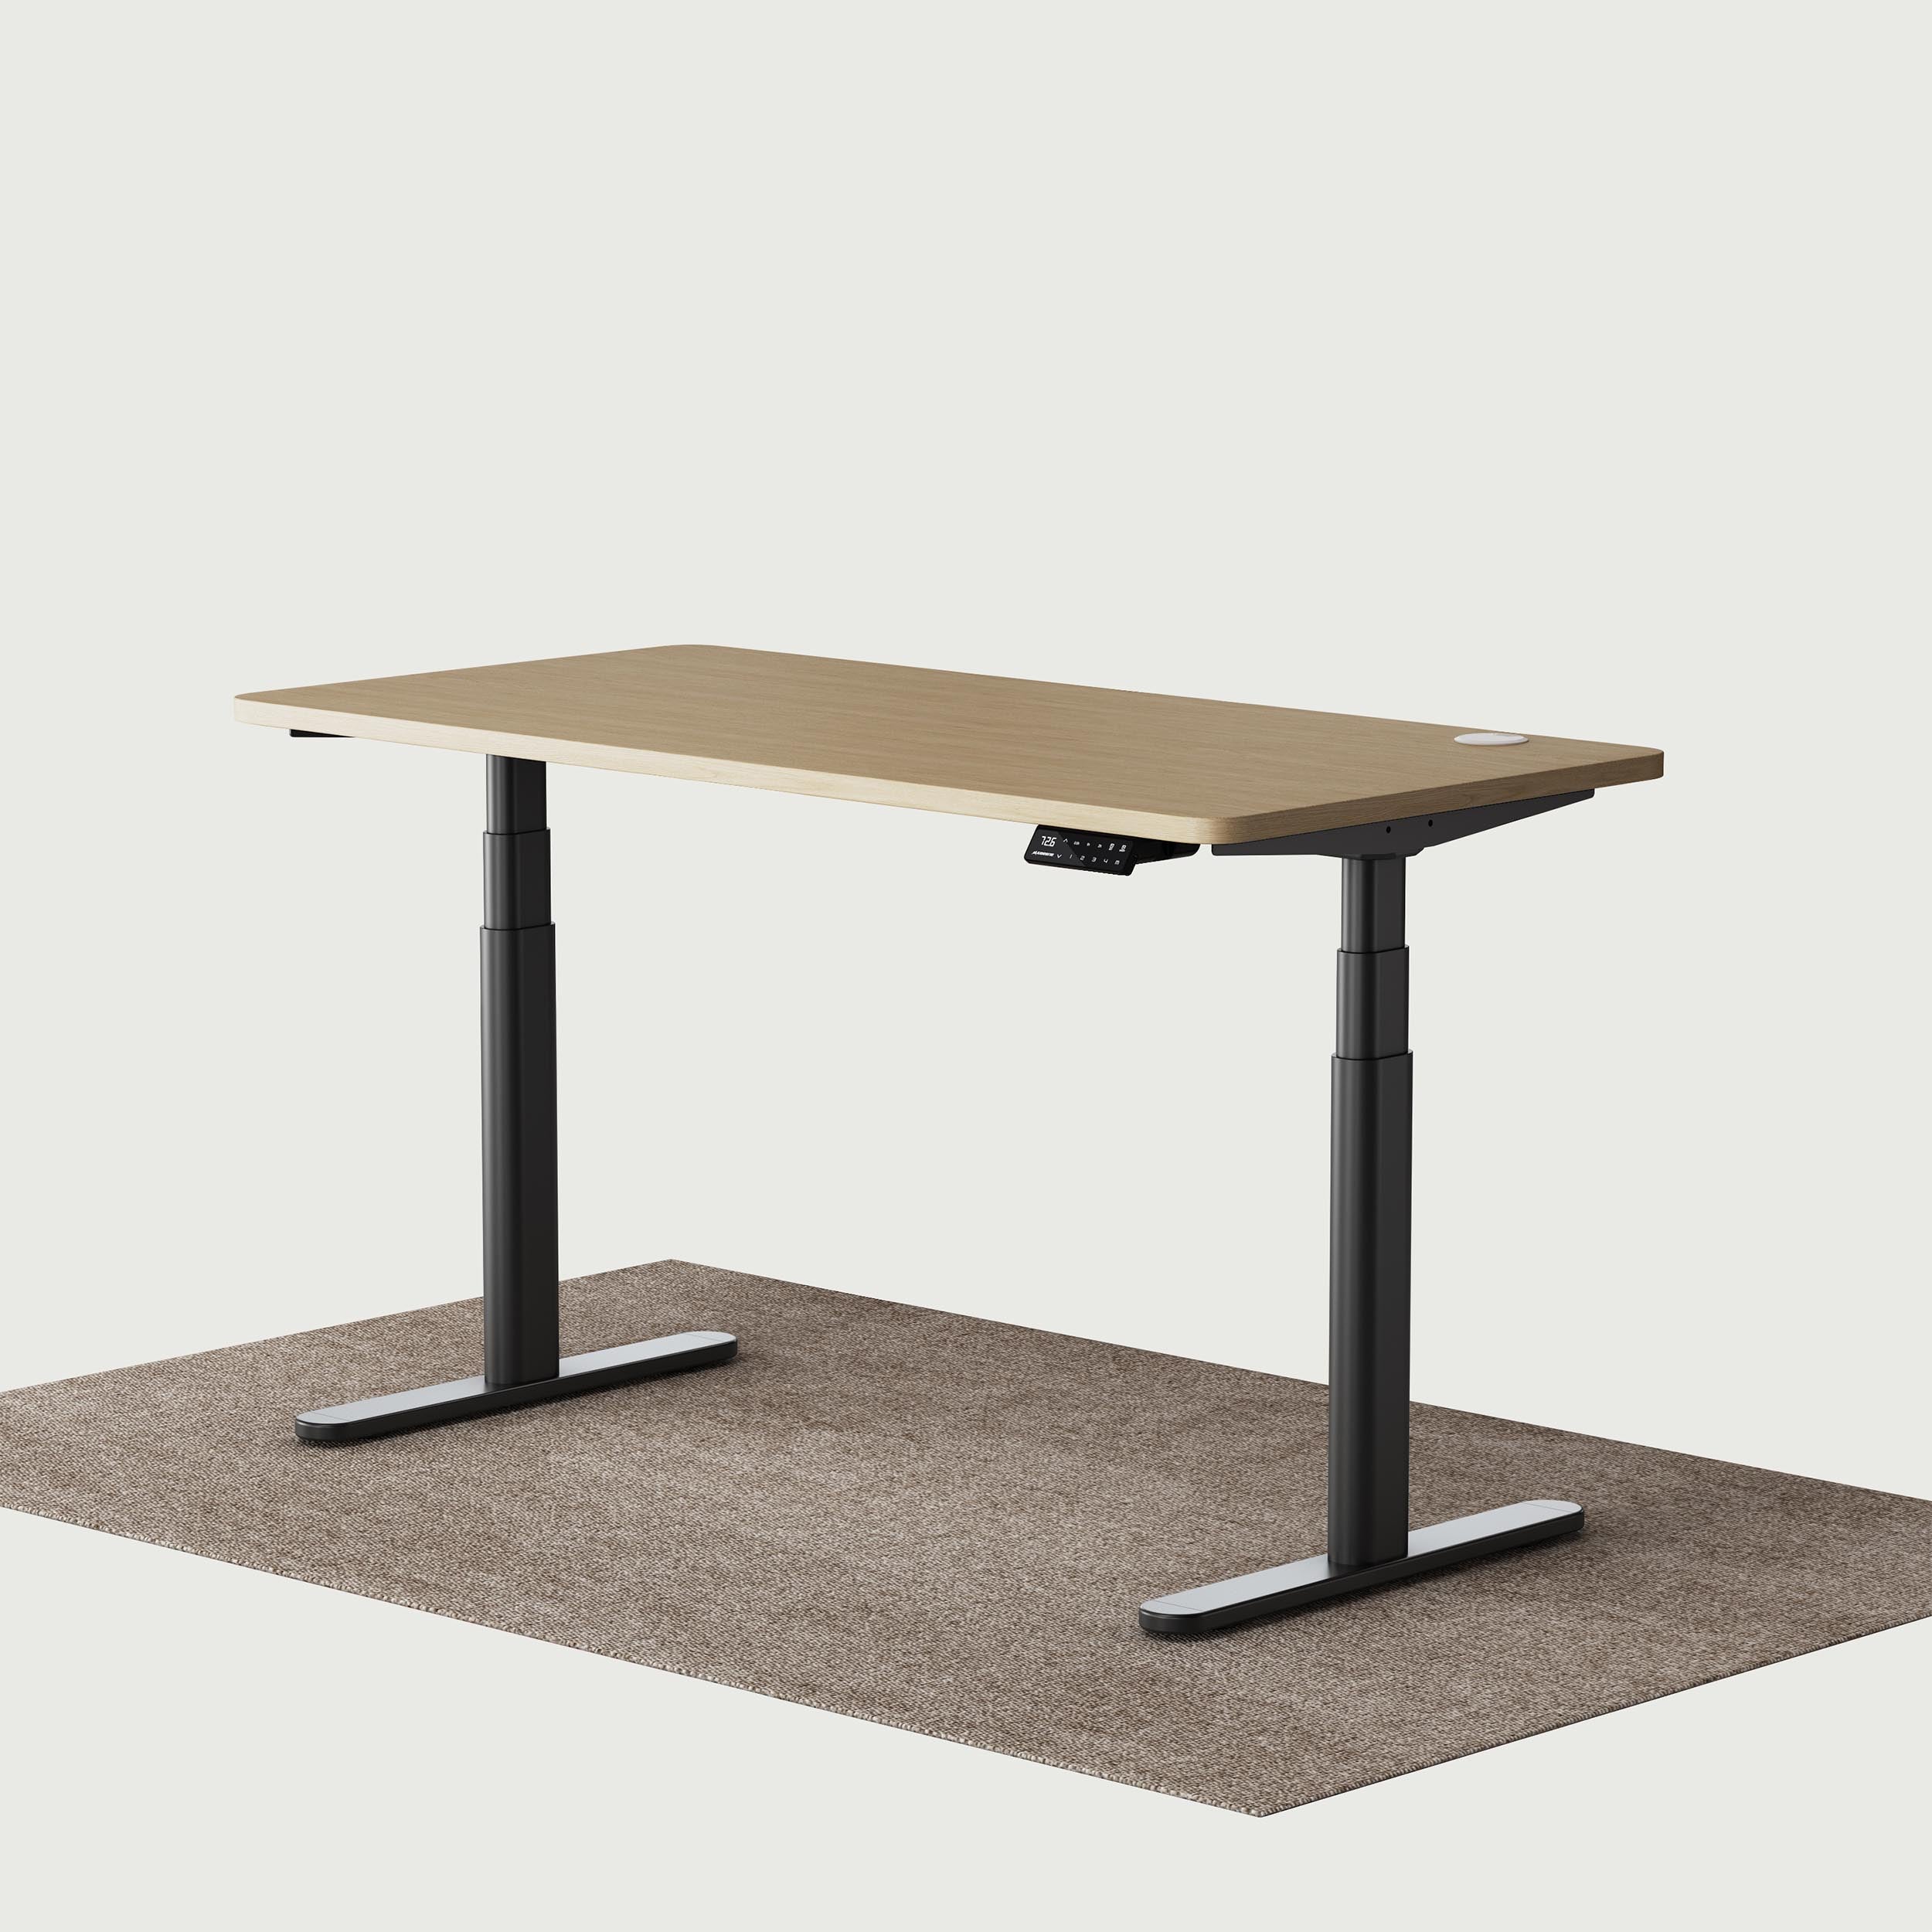 TH2 Pro Plus black oval electric standing desk frame with oak 140x70 cm desktop